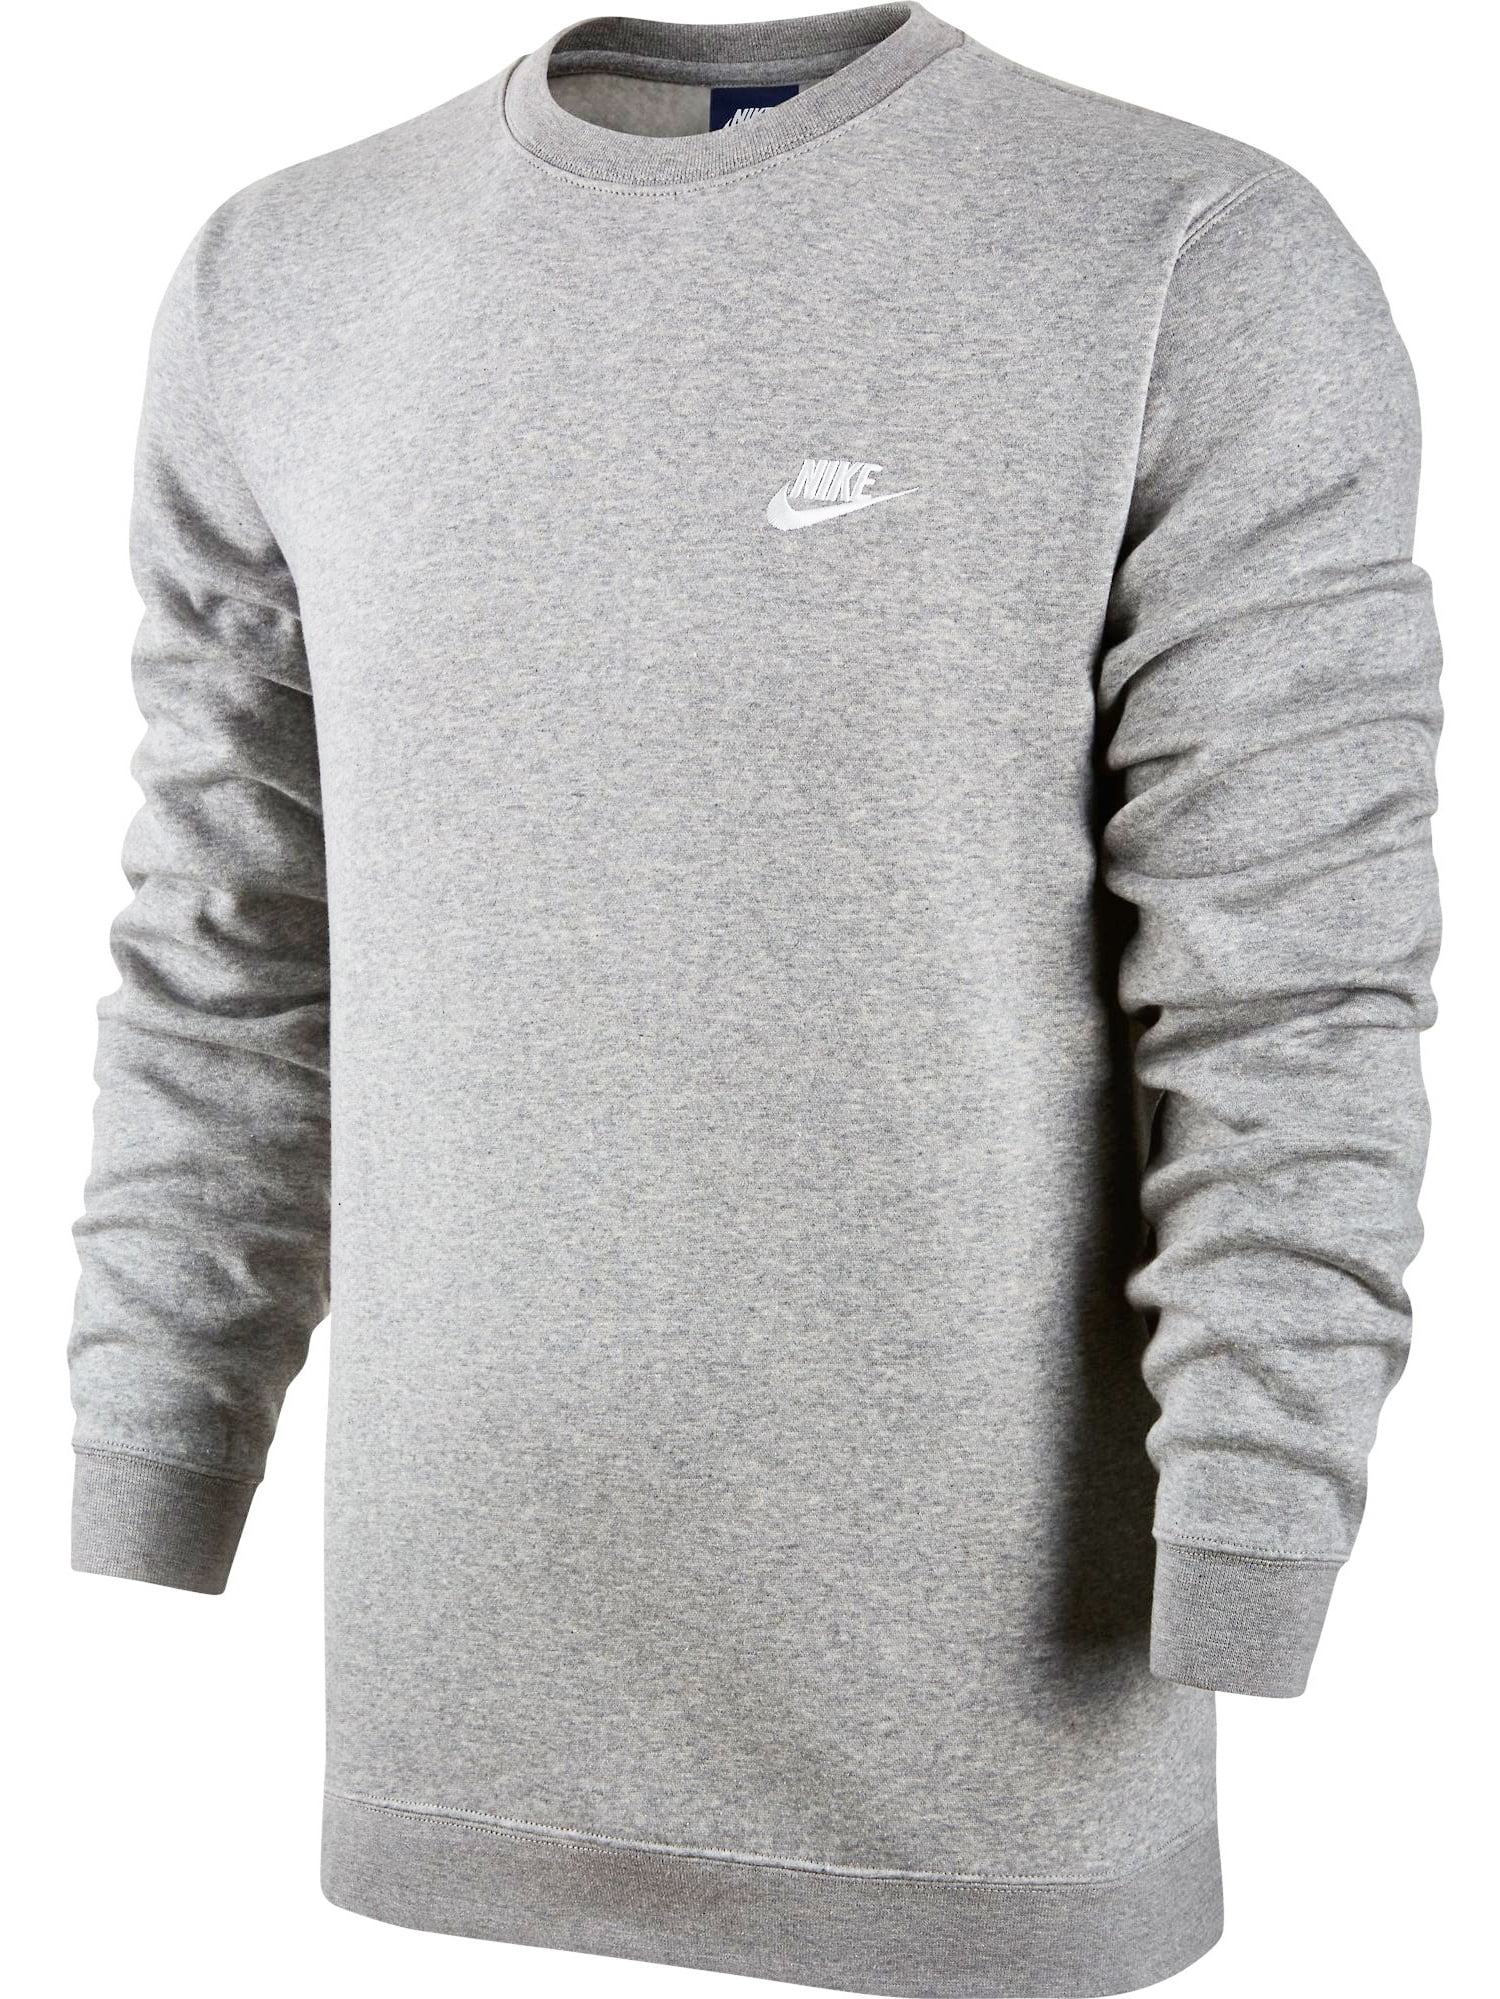 Nike Club Fleece Crew Neck T-Shirt Grey Heather/White 804340-063 Walmart.com